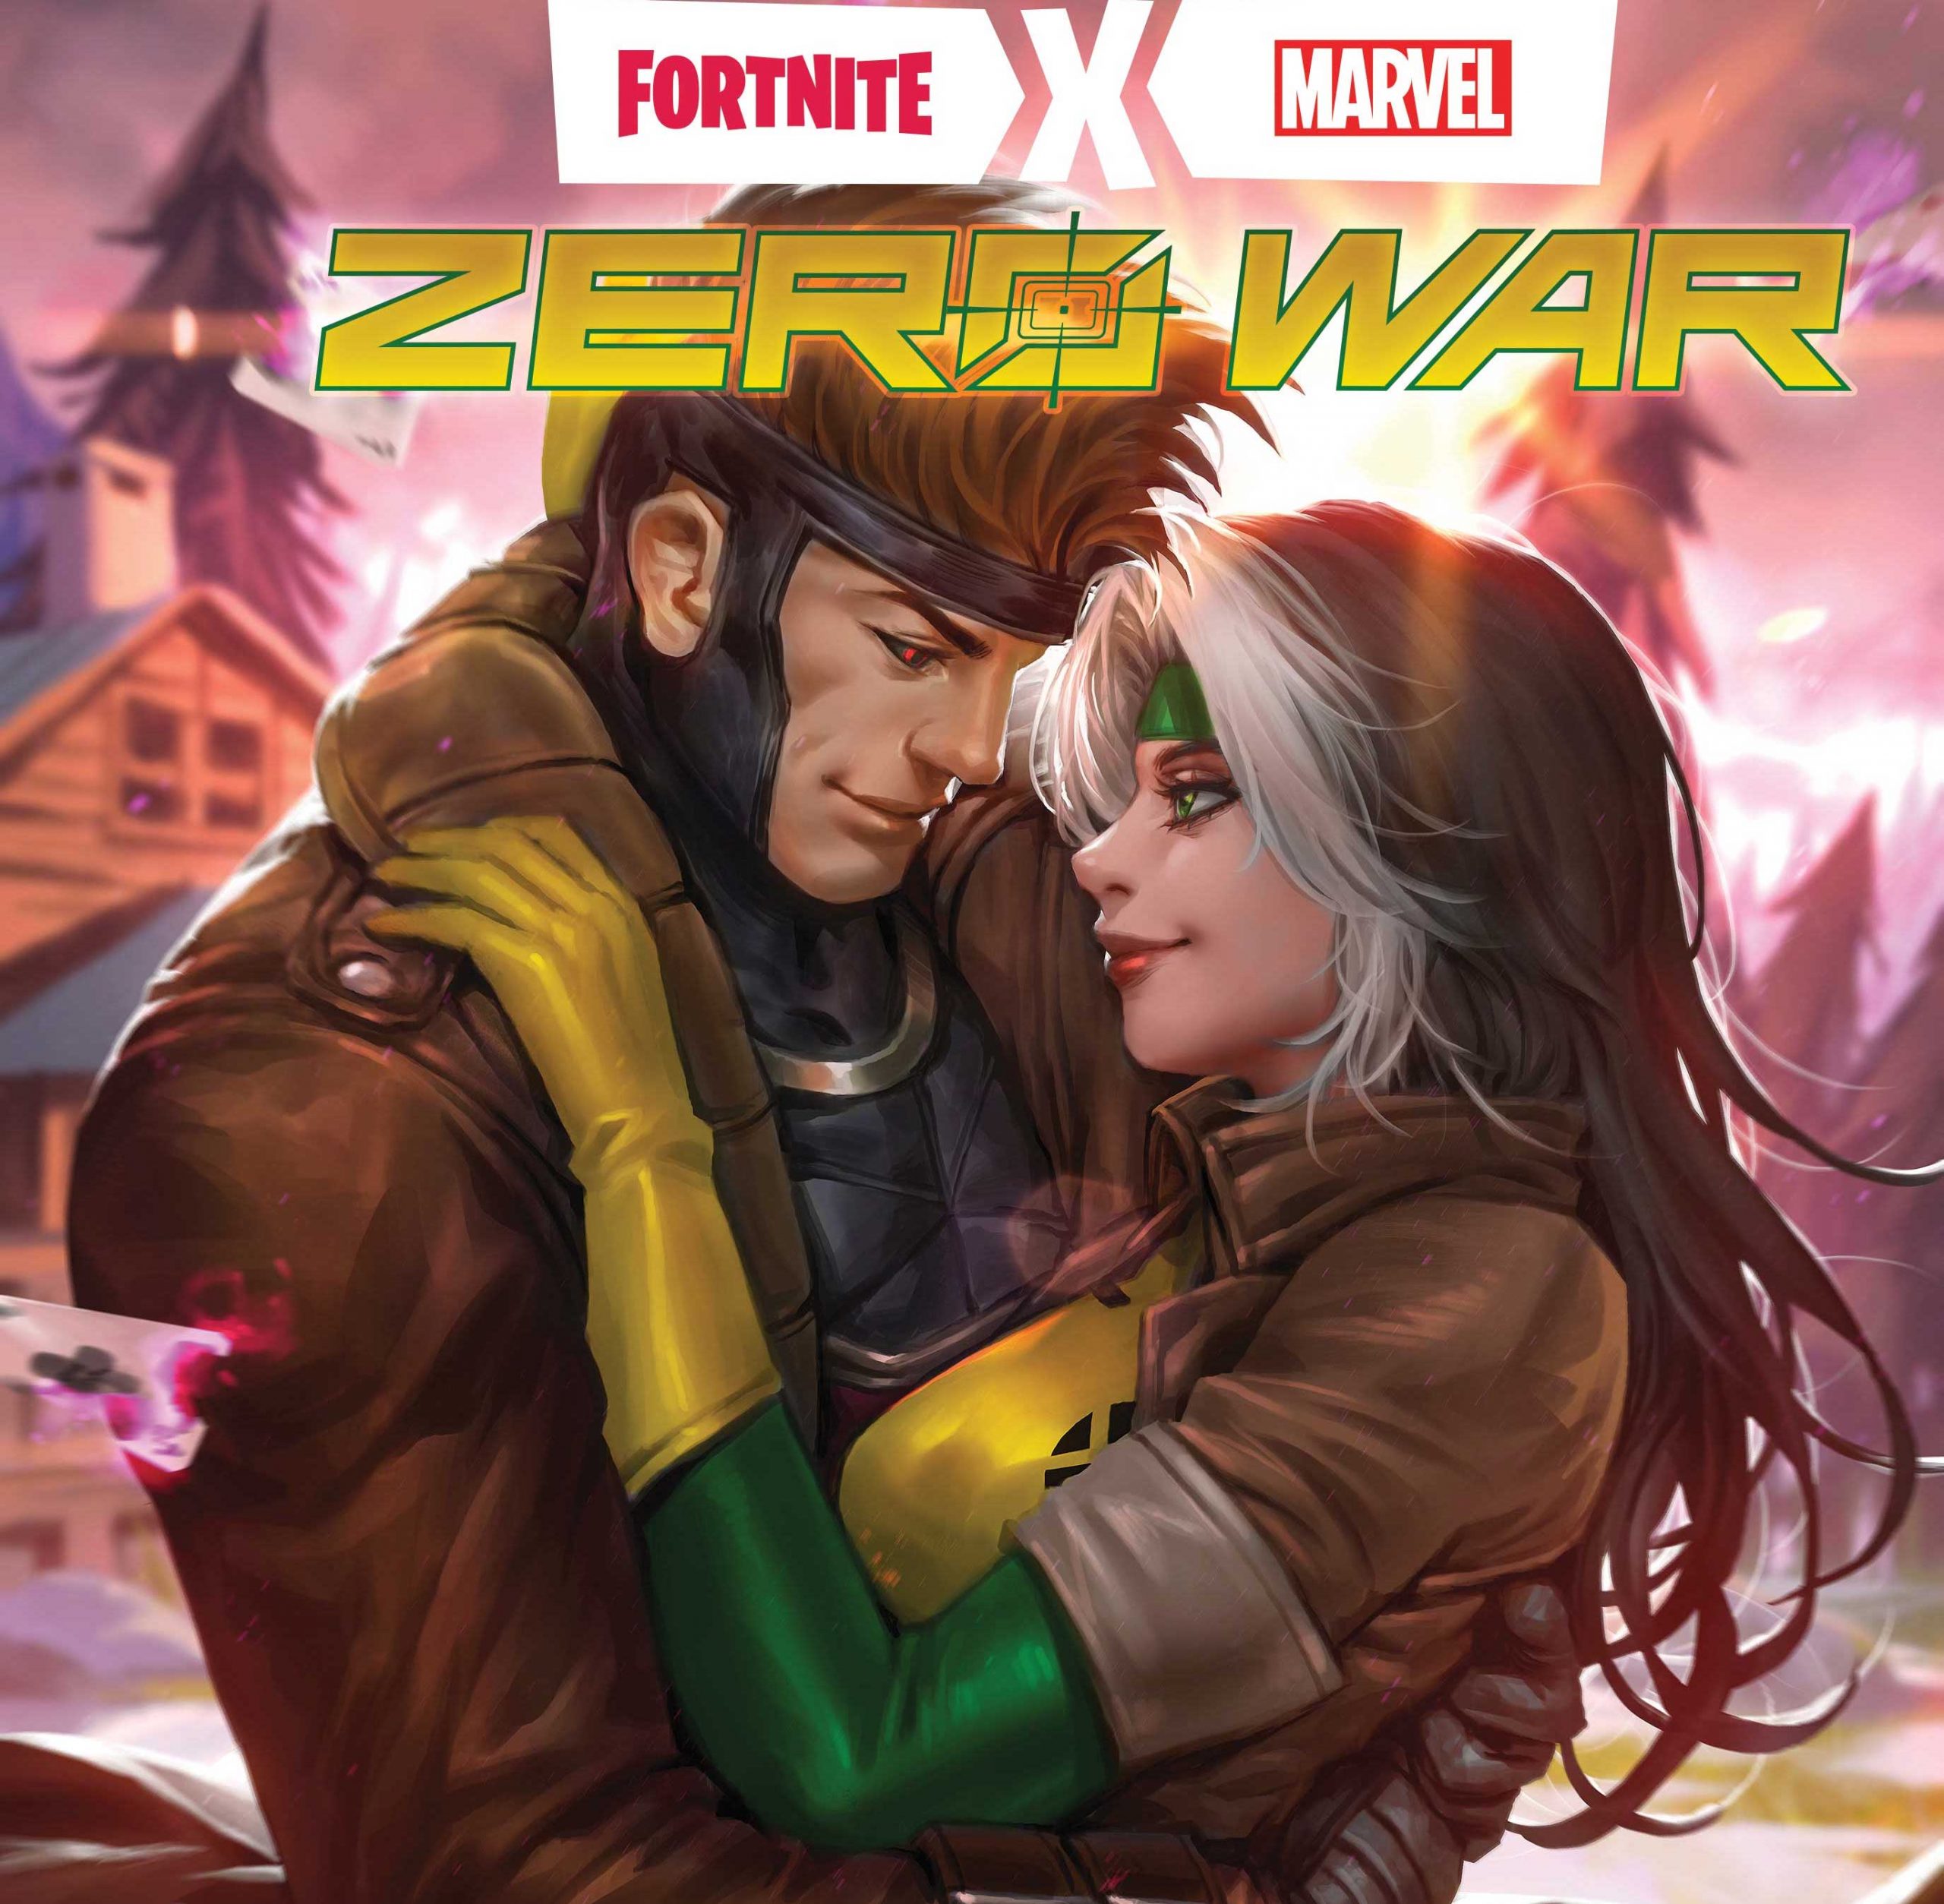 Marvel shows off 'Fortnite X Marvel: Zero War' #3 covers